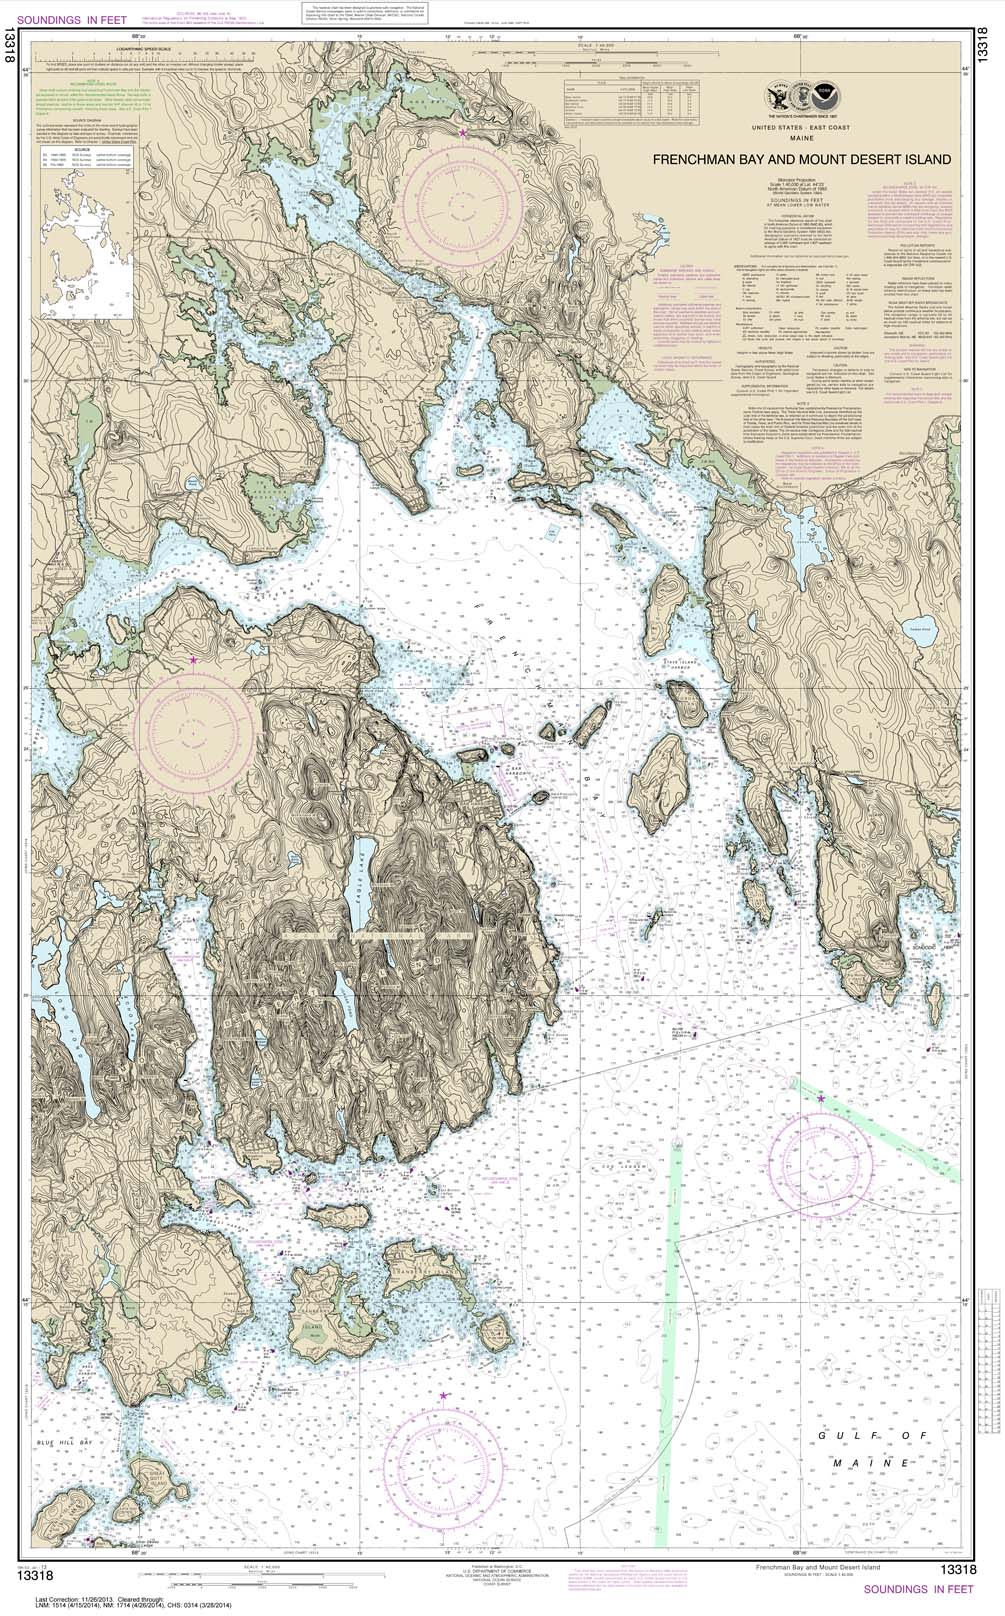 HISTORICAL NOAA Chart 13318: Frenchman Bay and Mount Desert lsland